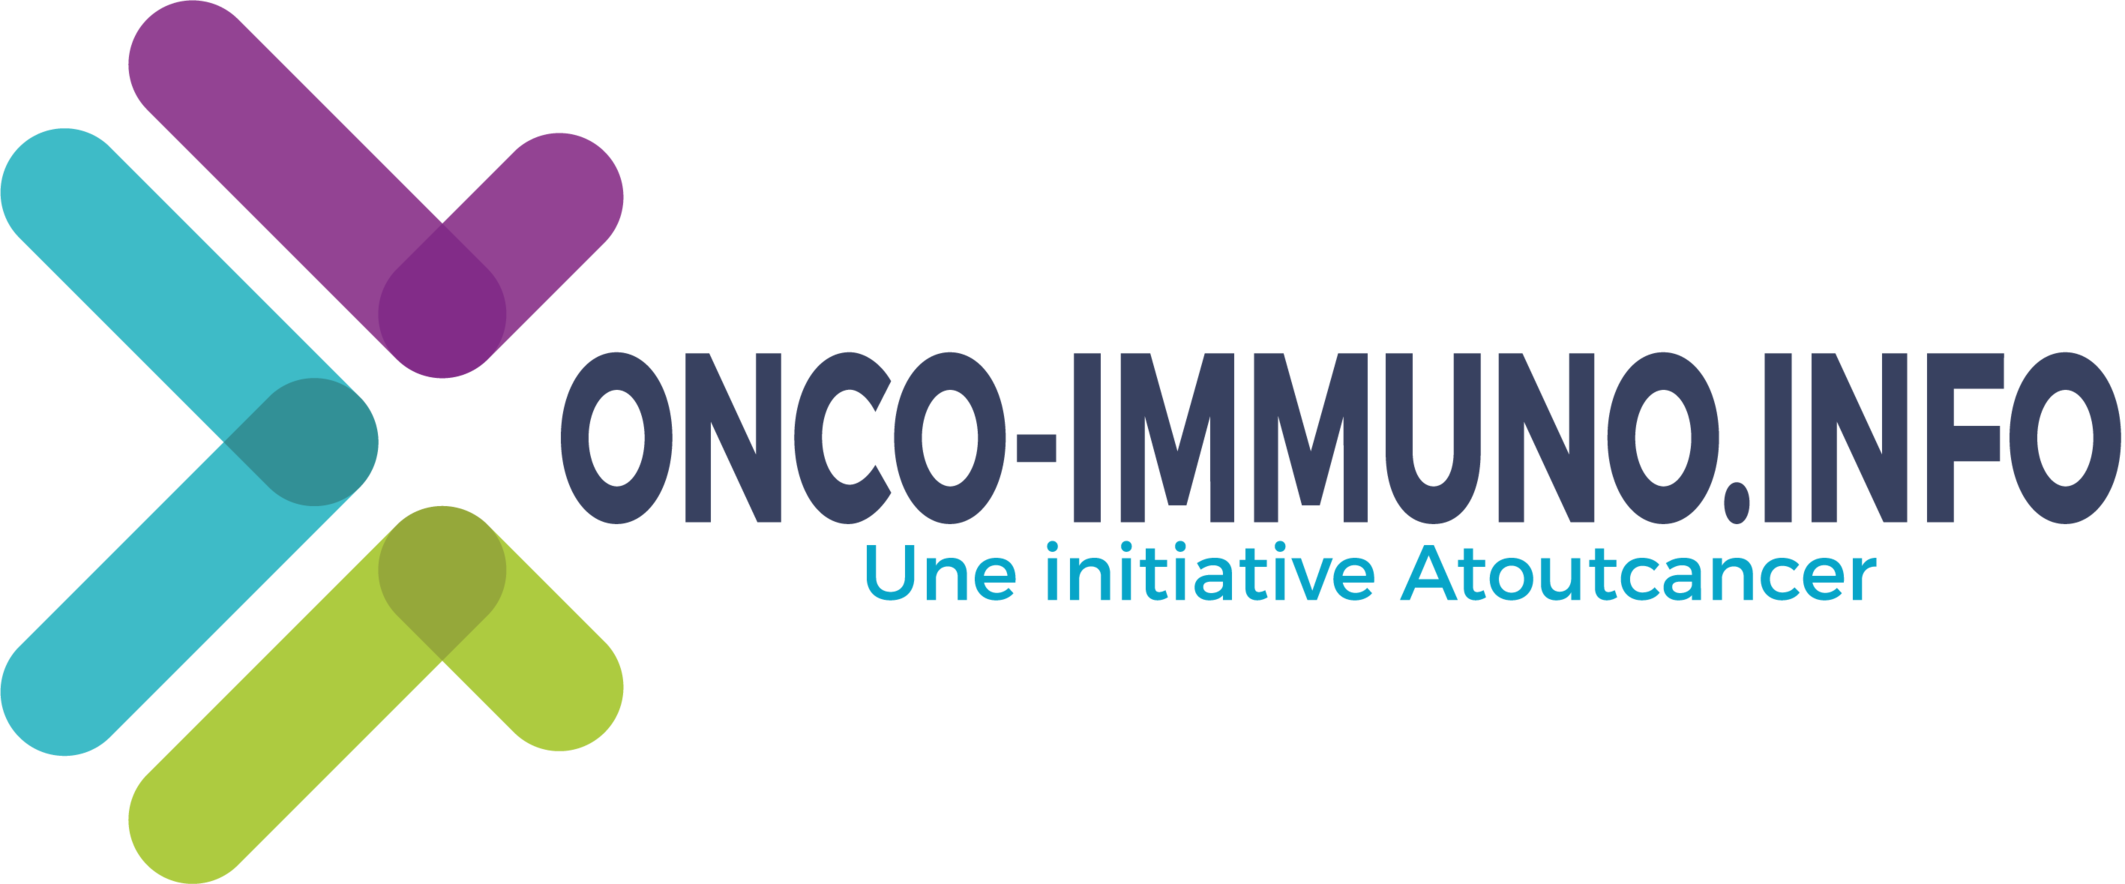 onco-immuno.info